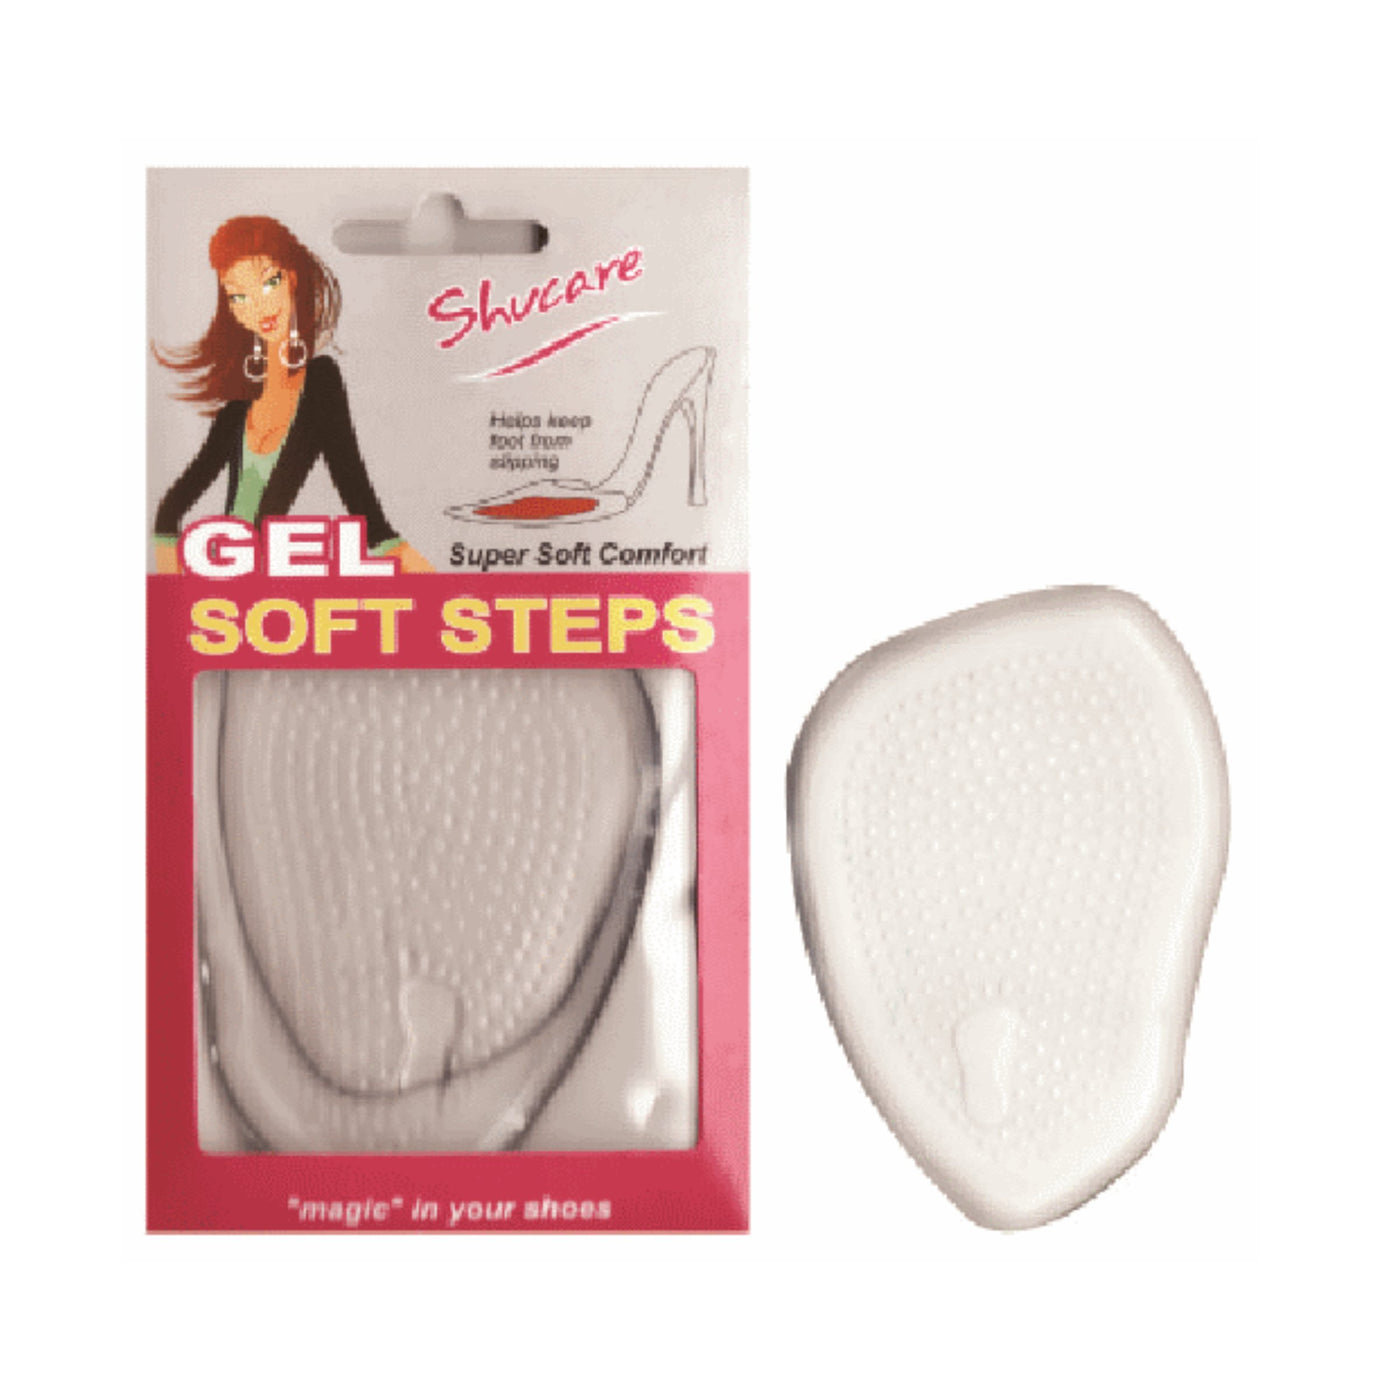 Gel Soft Steps